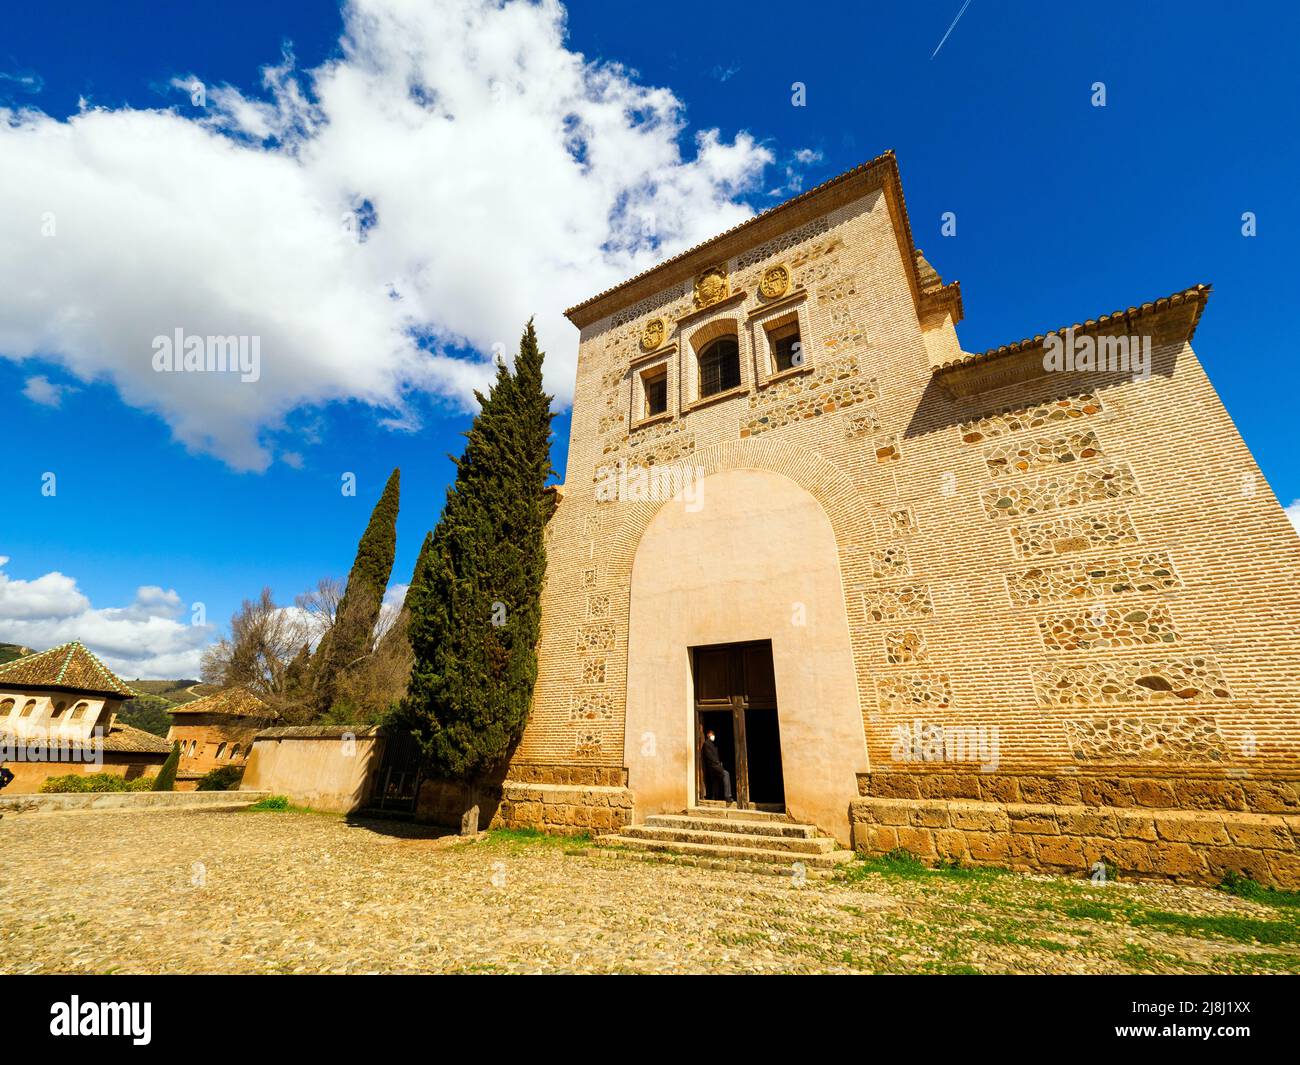 Iglesia de Santa Maria de la Encarnacion (Church of Santa Maria of the Incarnation) in the Alhambra complex - Granada, Spain Stock Photo